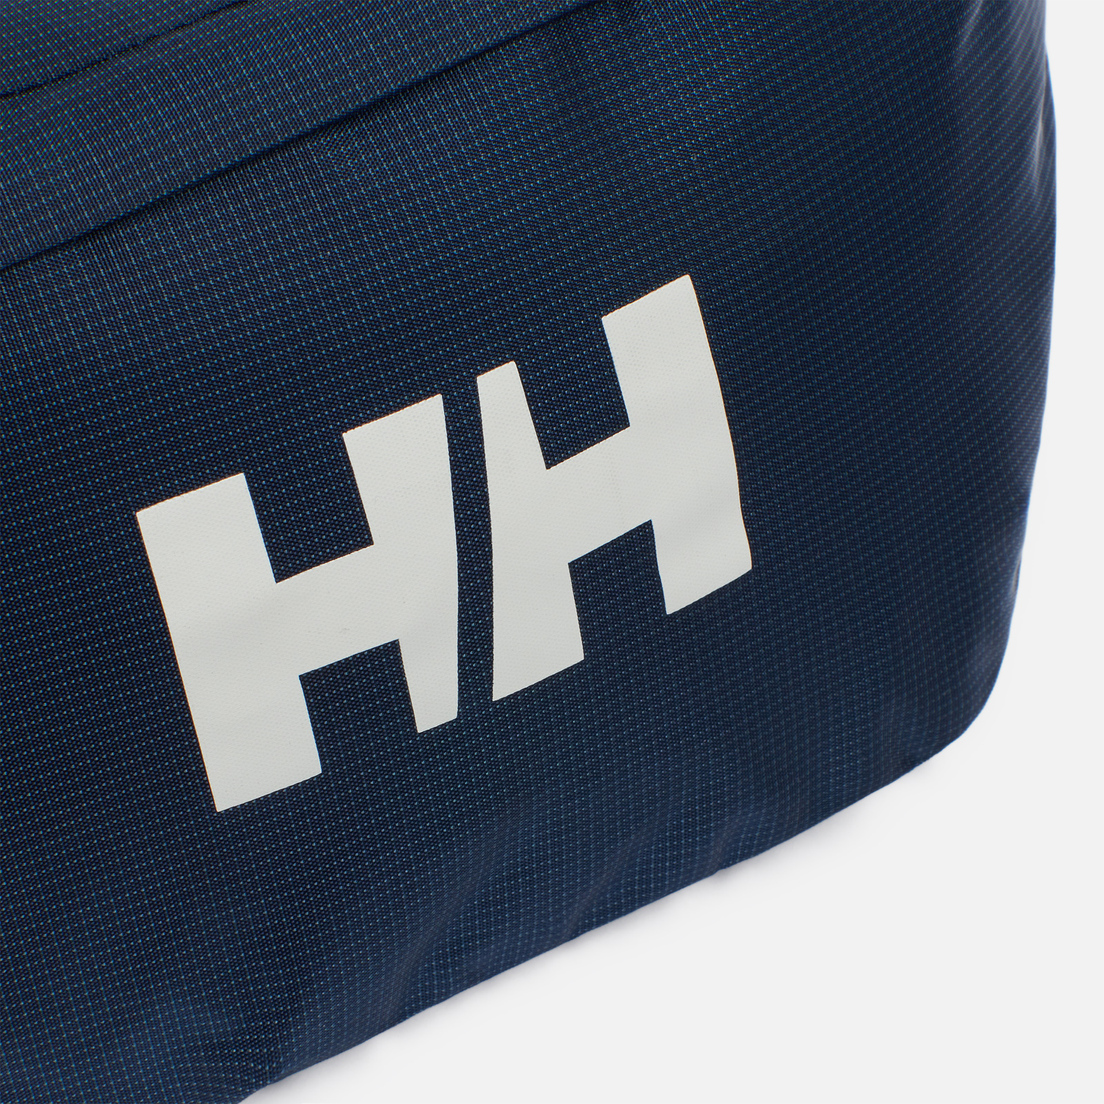 Helly Hansen Сумка на пояс HH Logo